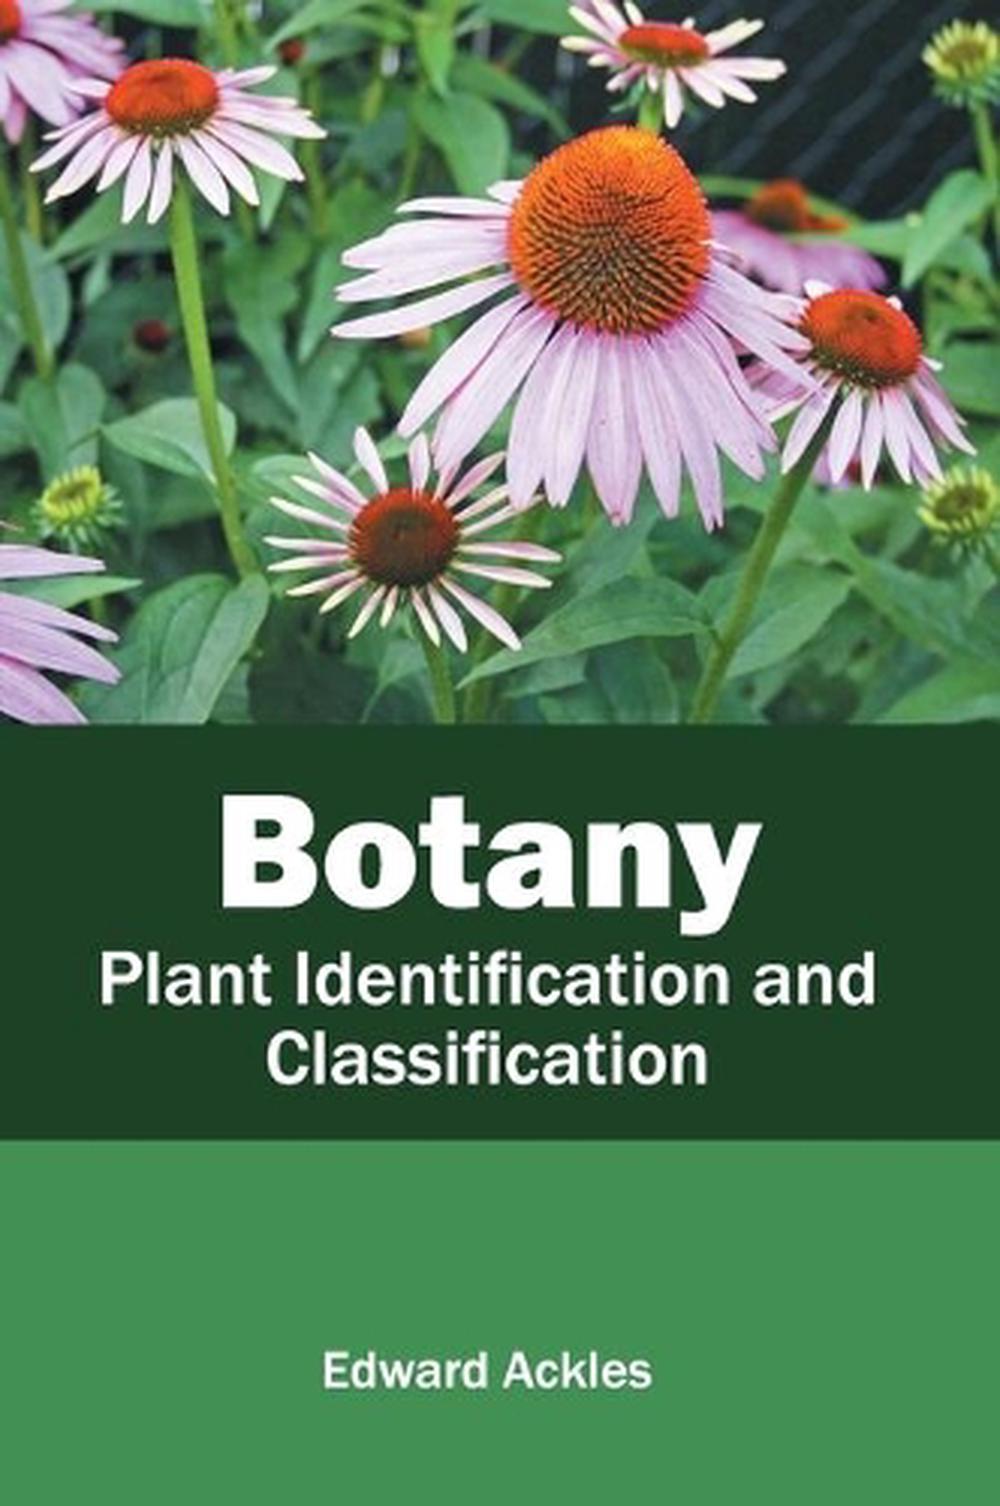 Taxonomic Hierarchy Of Plants Botany Studies - vrogue.co